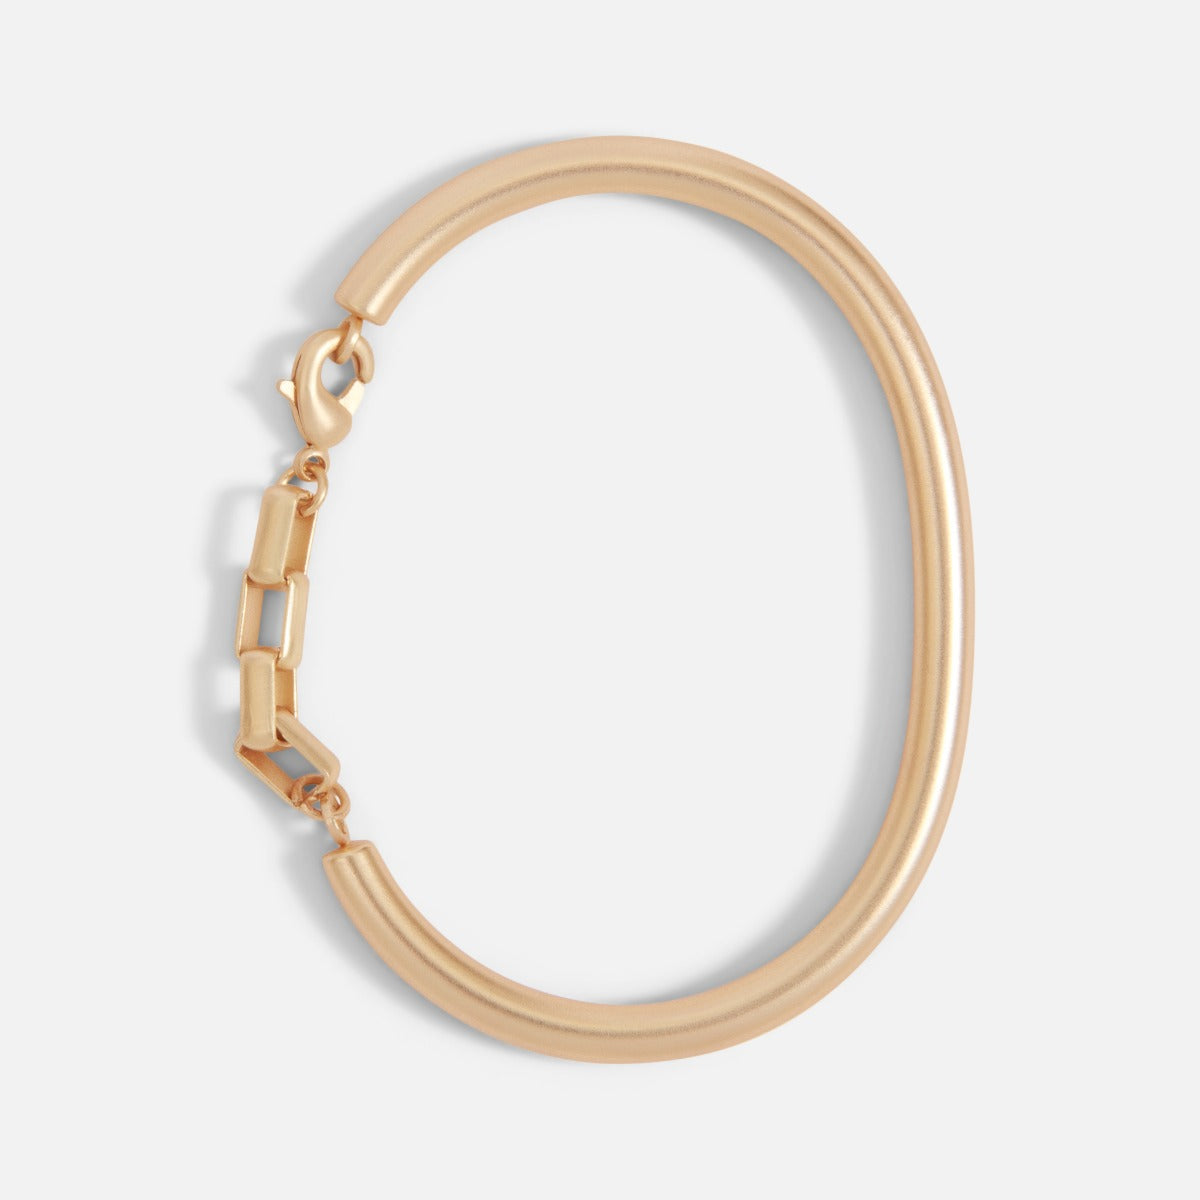 Set of two golden chain bracelets